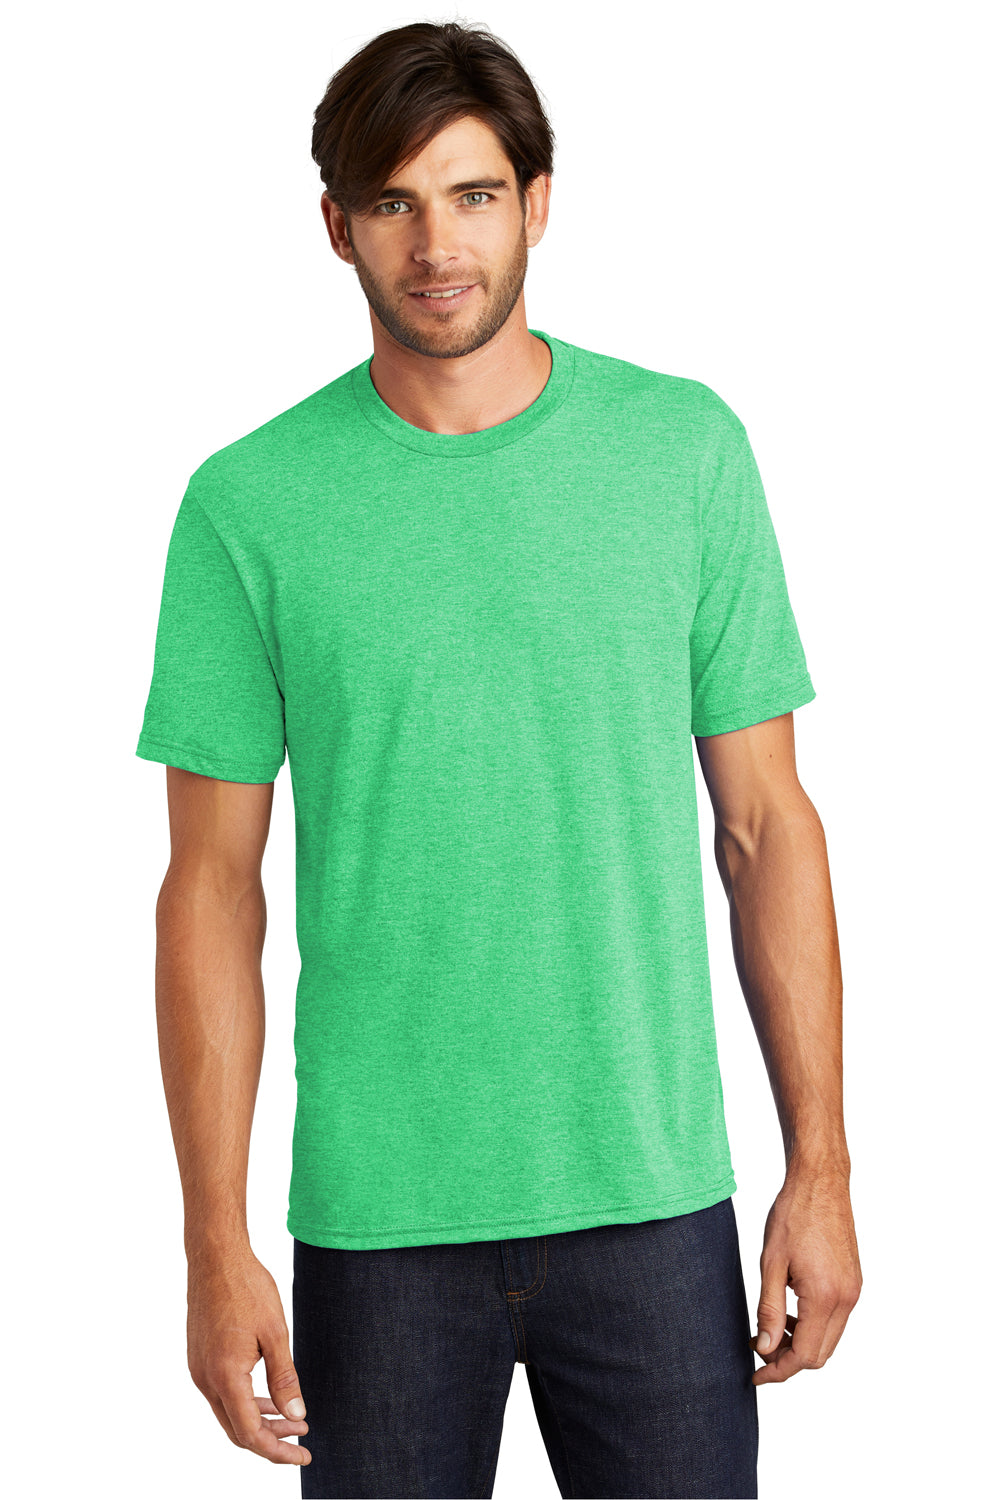 District DM130 Mens Perfect Tri Short Sleeve Crewneck T-Shirt Green Frost Front